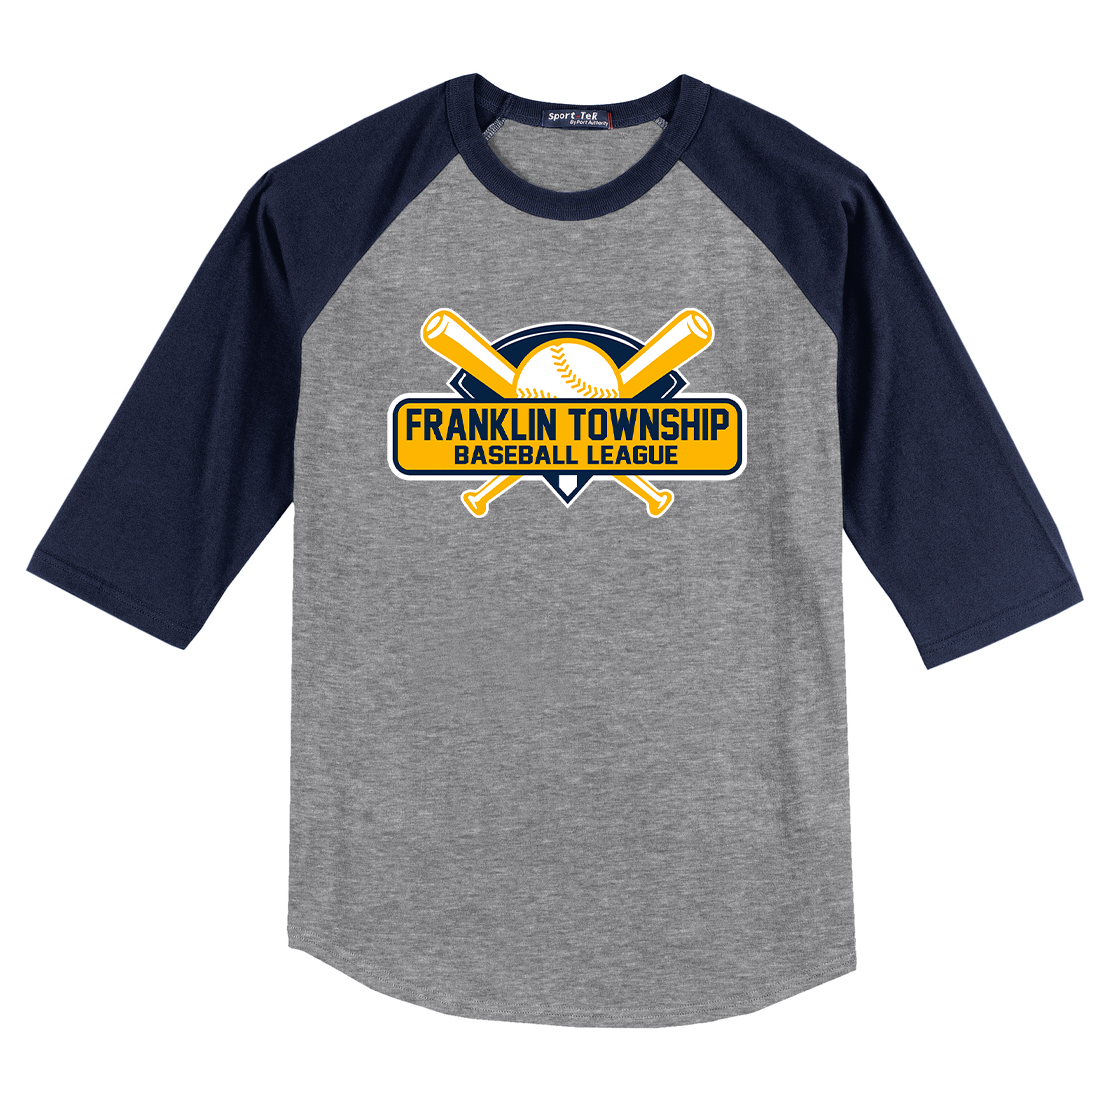 Franklin Township Softball League 3/4 Sleeve Baseball Shirt